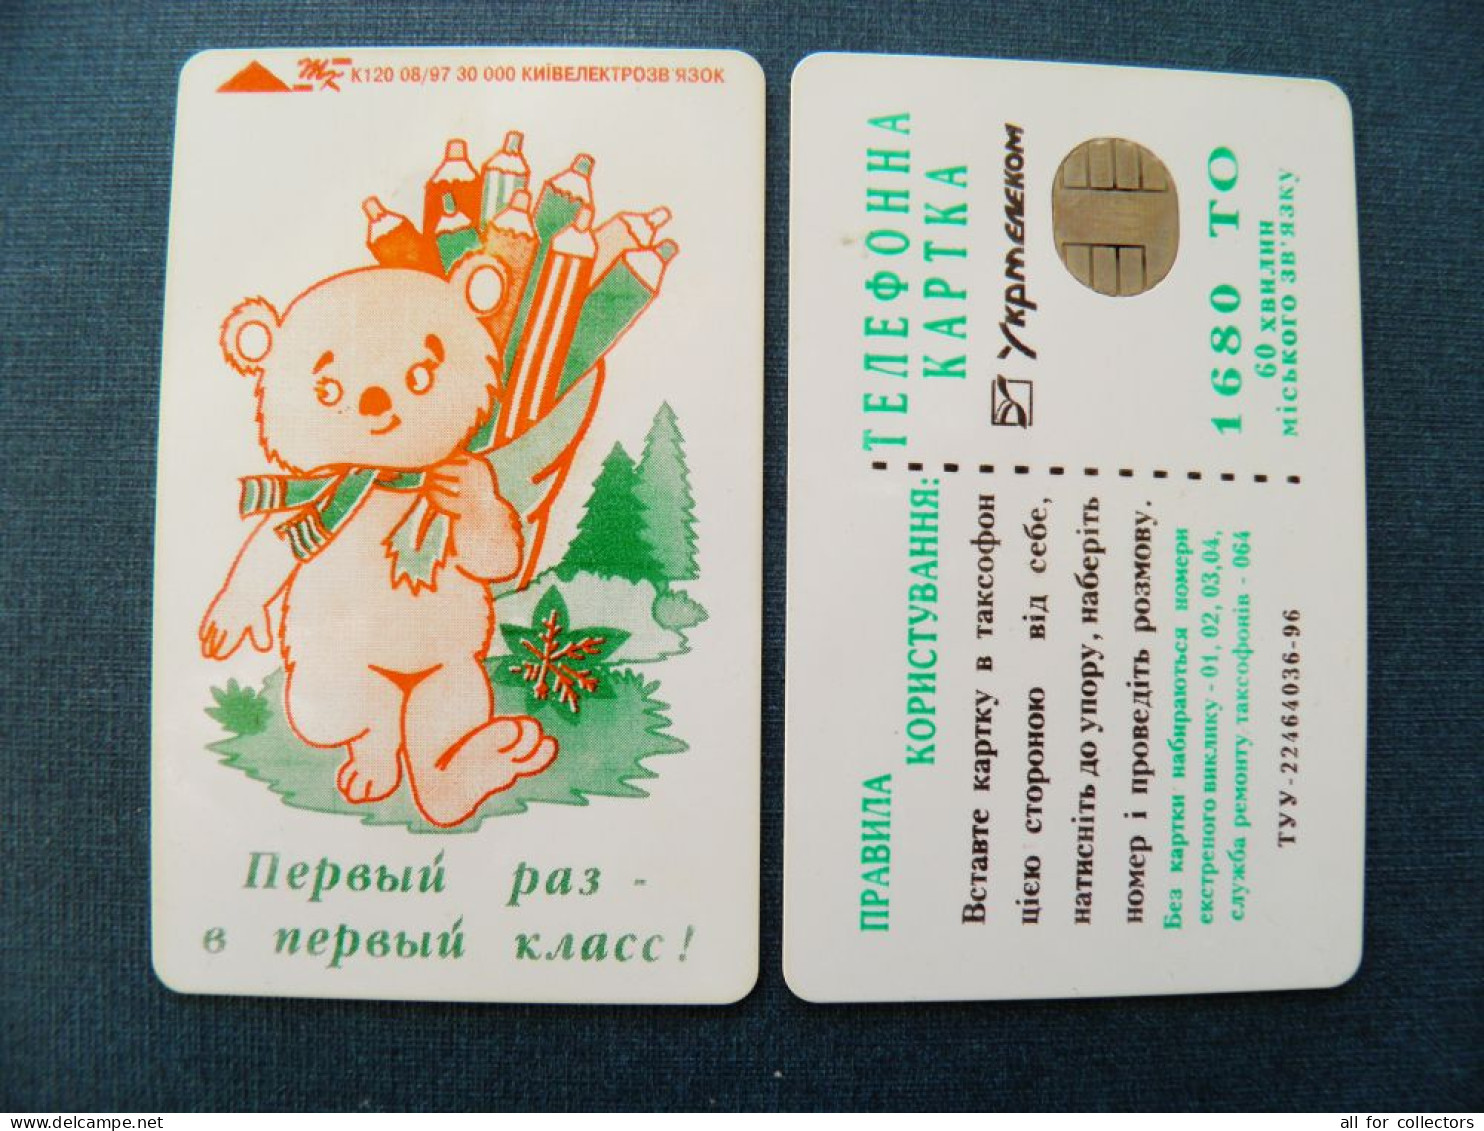 Phonecard Chip 1st Class September School Teddy Bear K120 08/97 30,000ex. 1680 Units UKRAINE - Ucrania